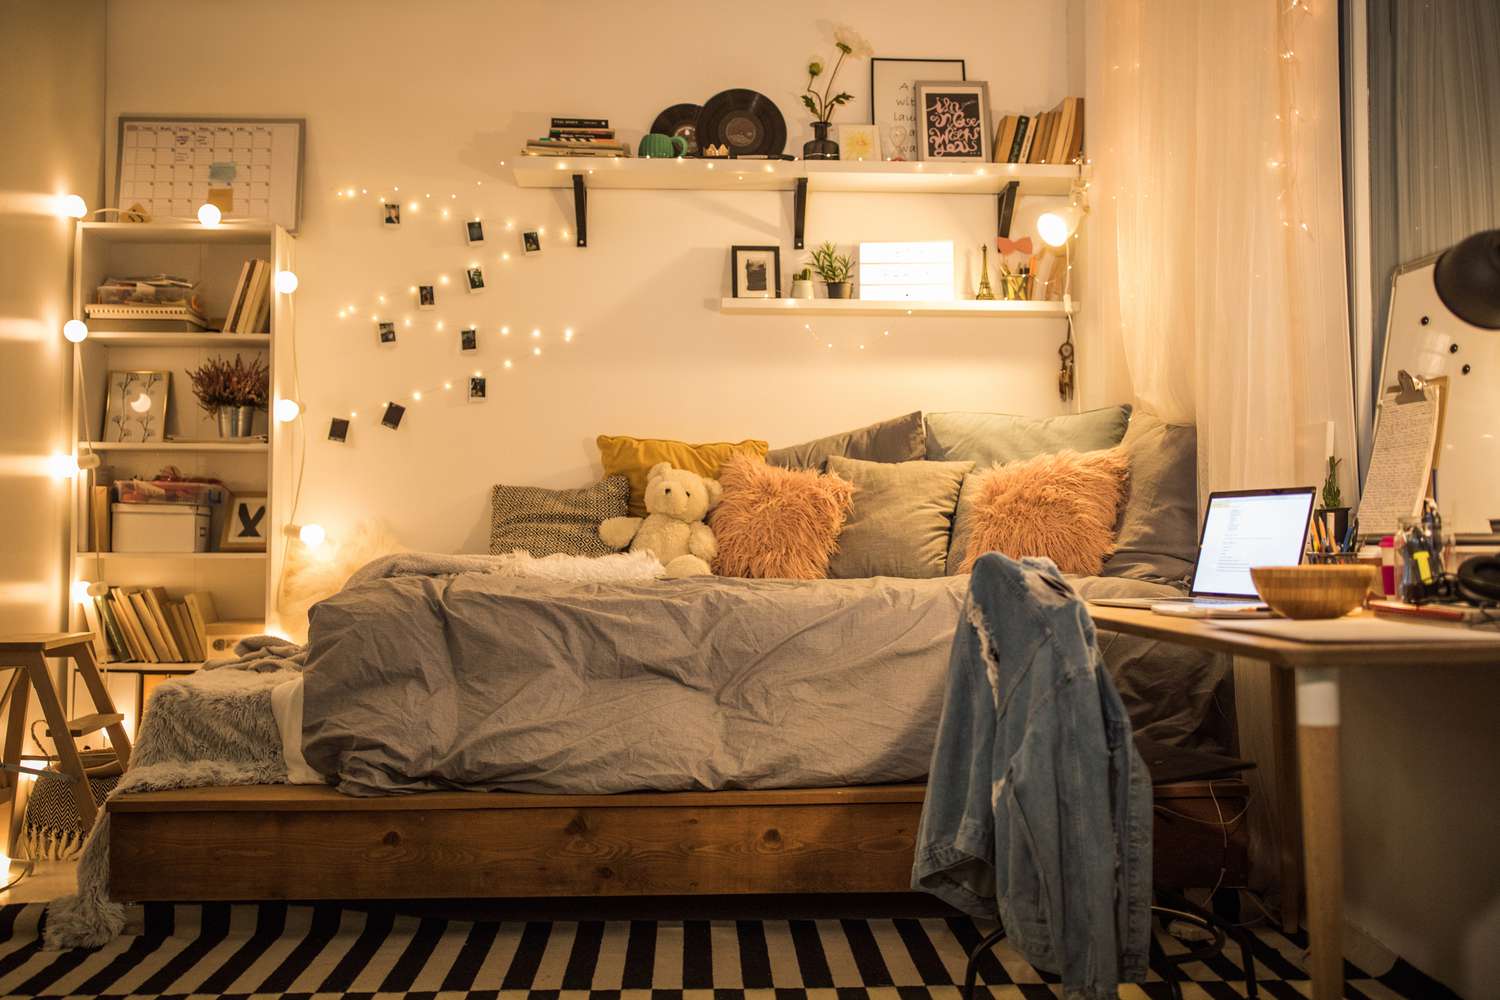 Top 5 Dorm Room Must-Haves